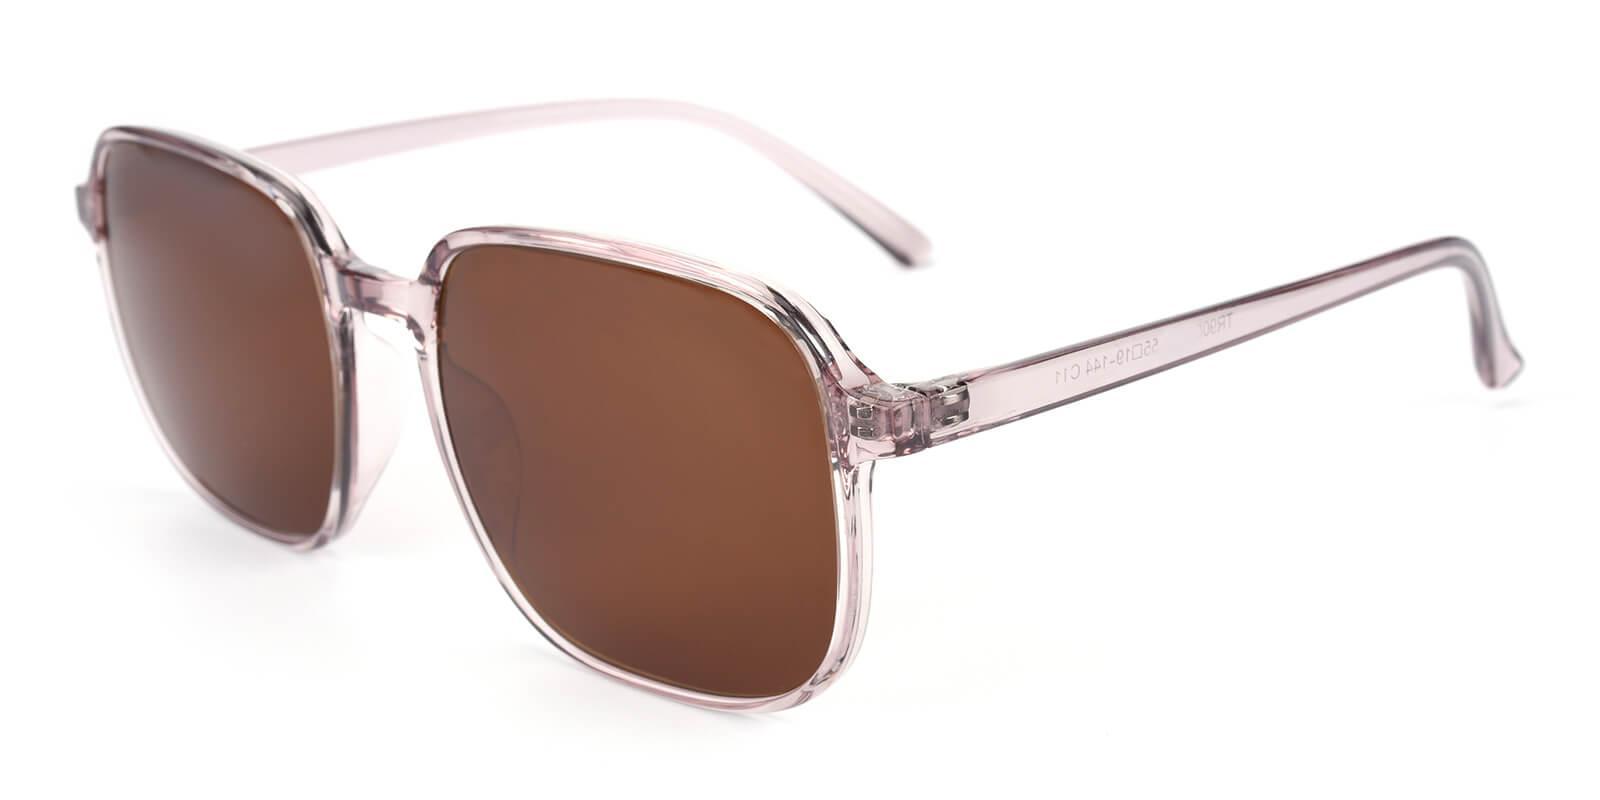 Terminal Purple TR Lightweight , Sunglasses , UniversalBridgeFit Frames from ABBE Glasses